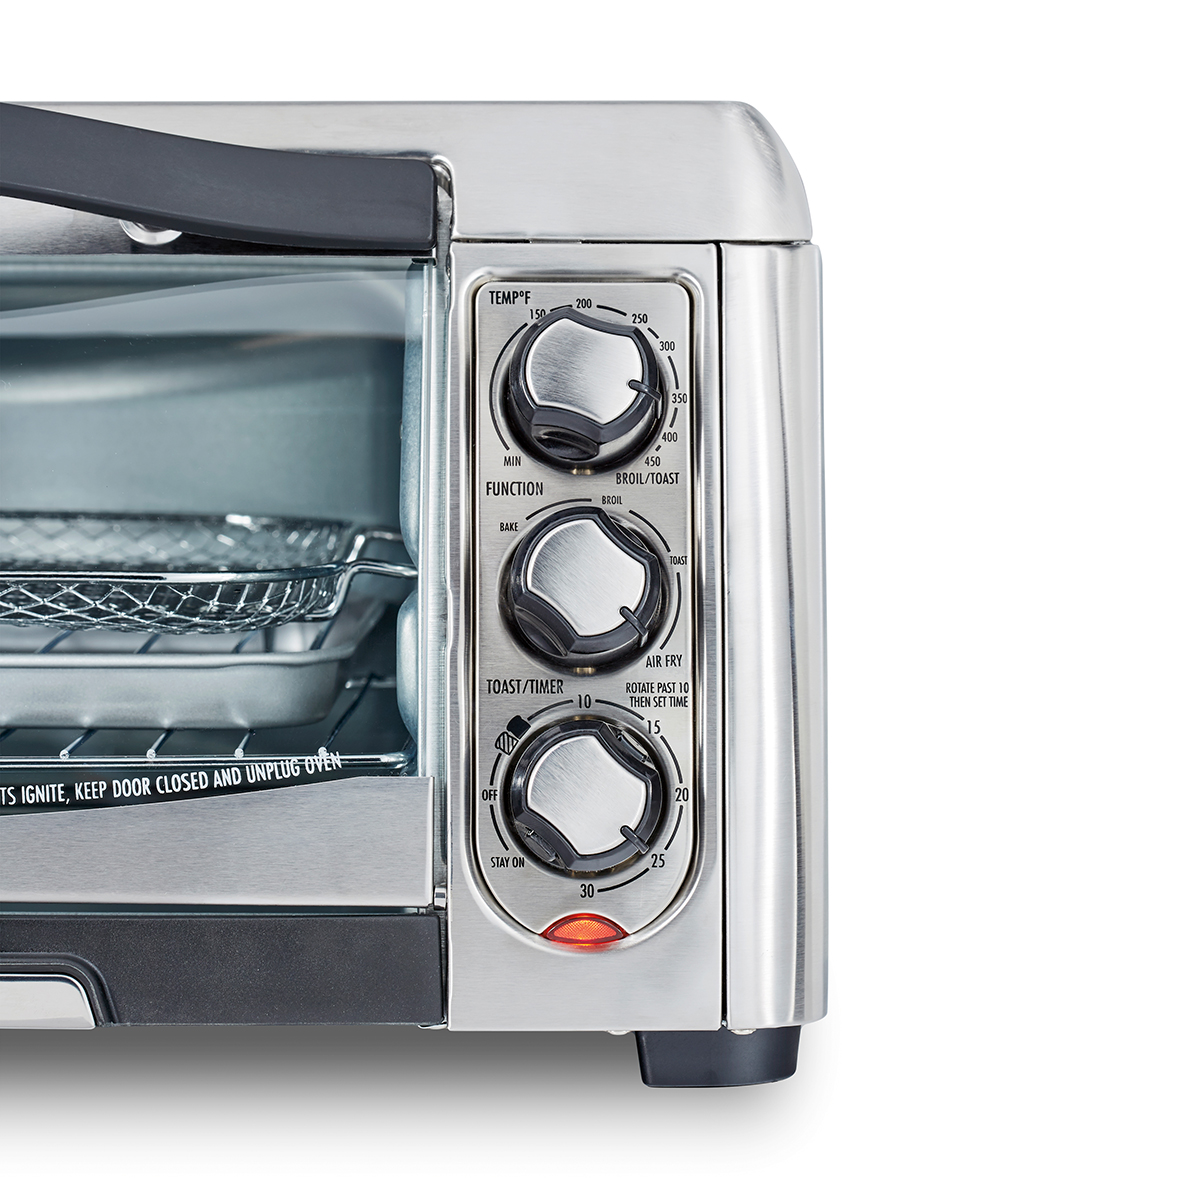 Hamilton Beach Sure-Crisp Air Fryer Toaster Oven Review 